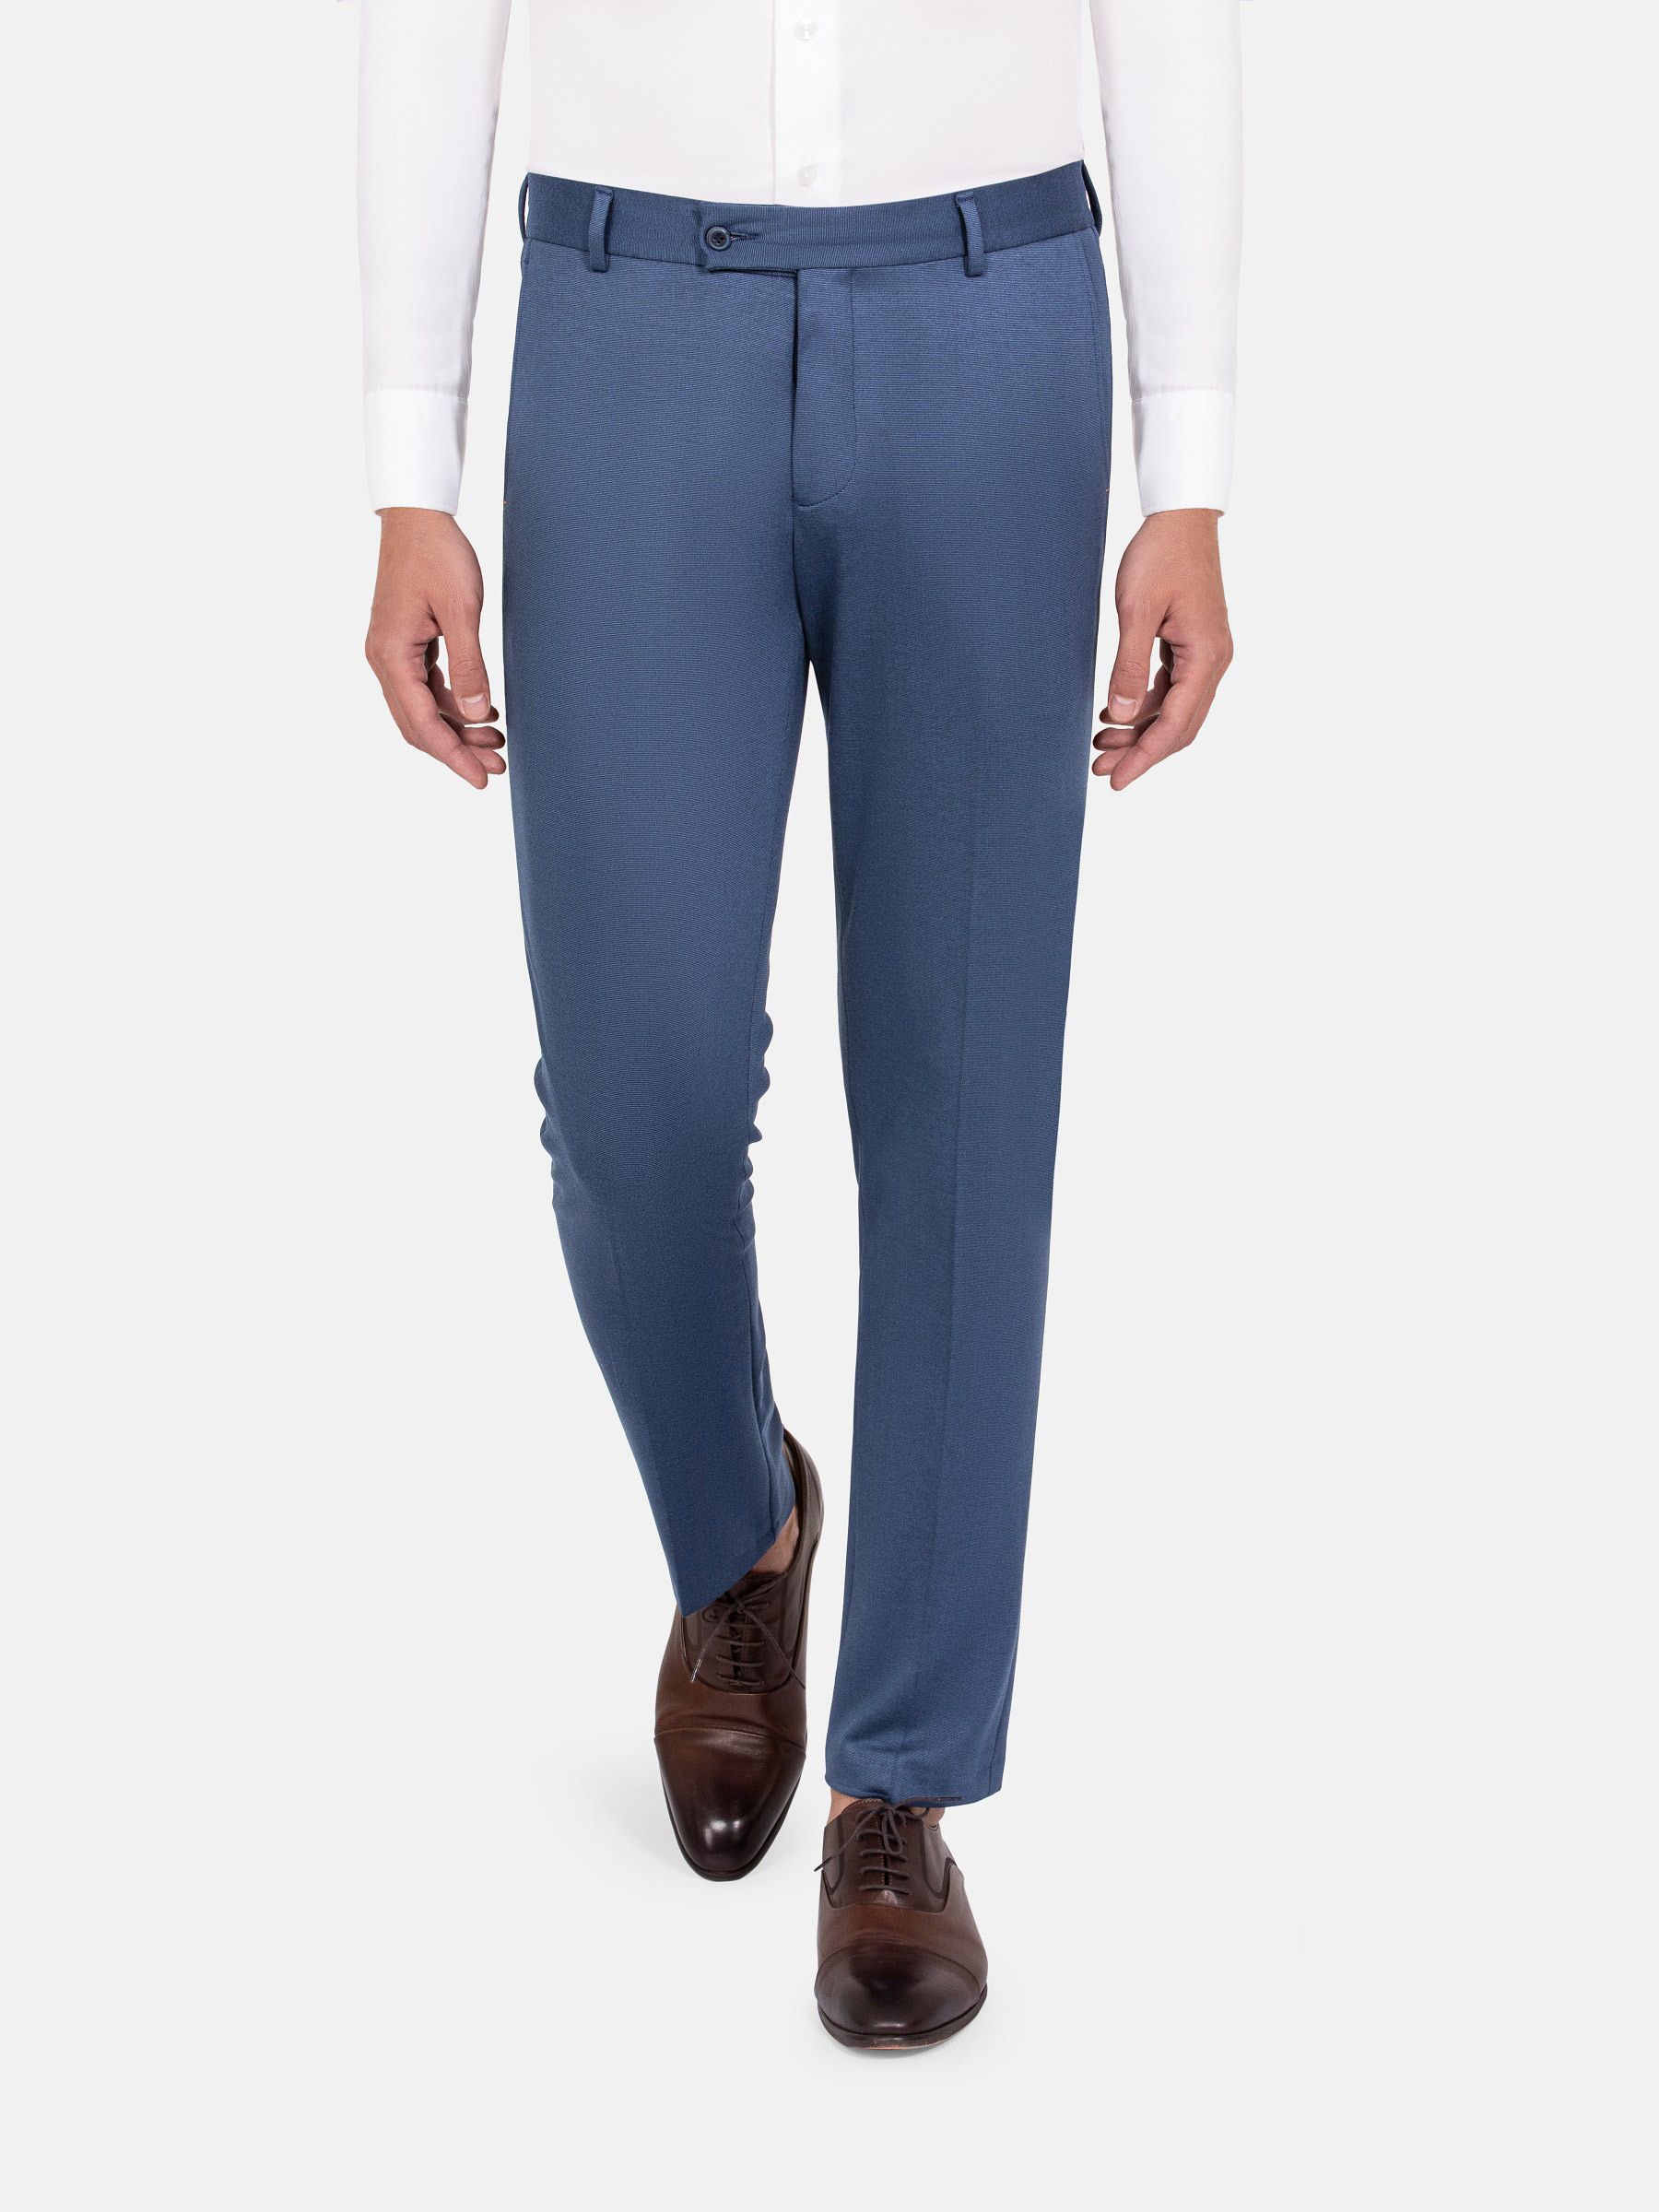 Style Hook Polyster Blend Formal Trousers For smart flex Man regular fit |formal  pants cream | black | trousers for men | officeial pant |